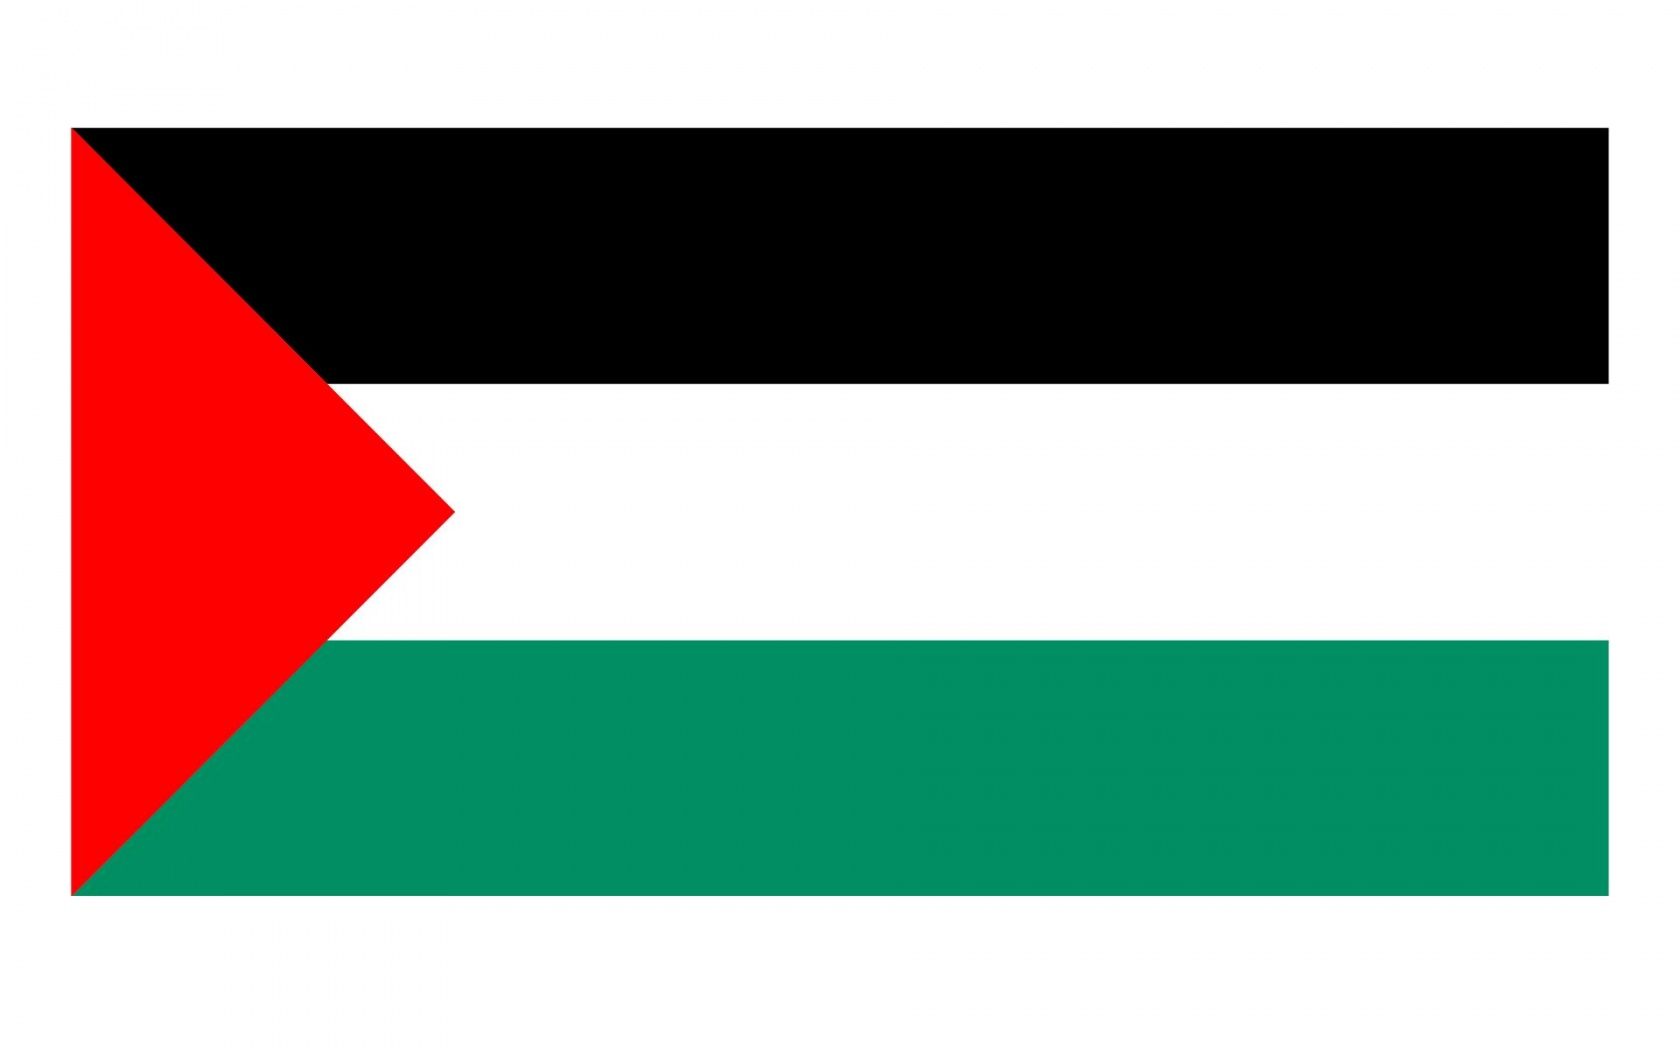 Palestine Flag Png Desktop Wallpaper And Stock Photos